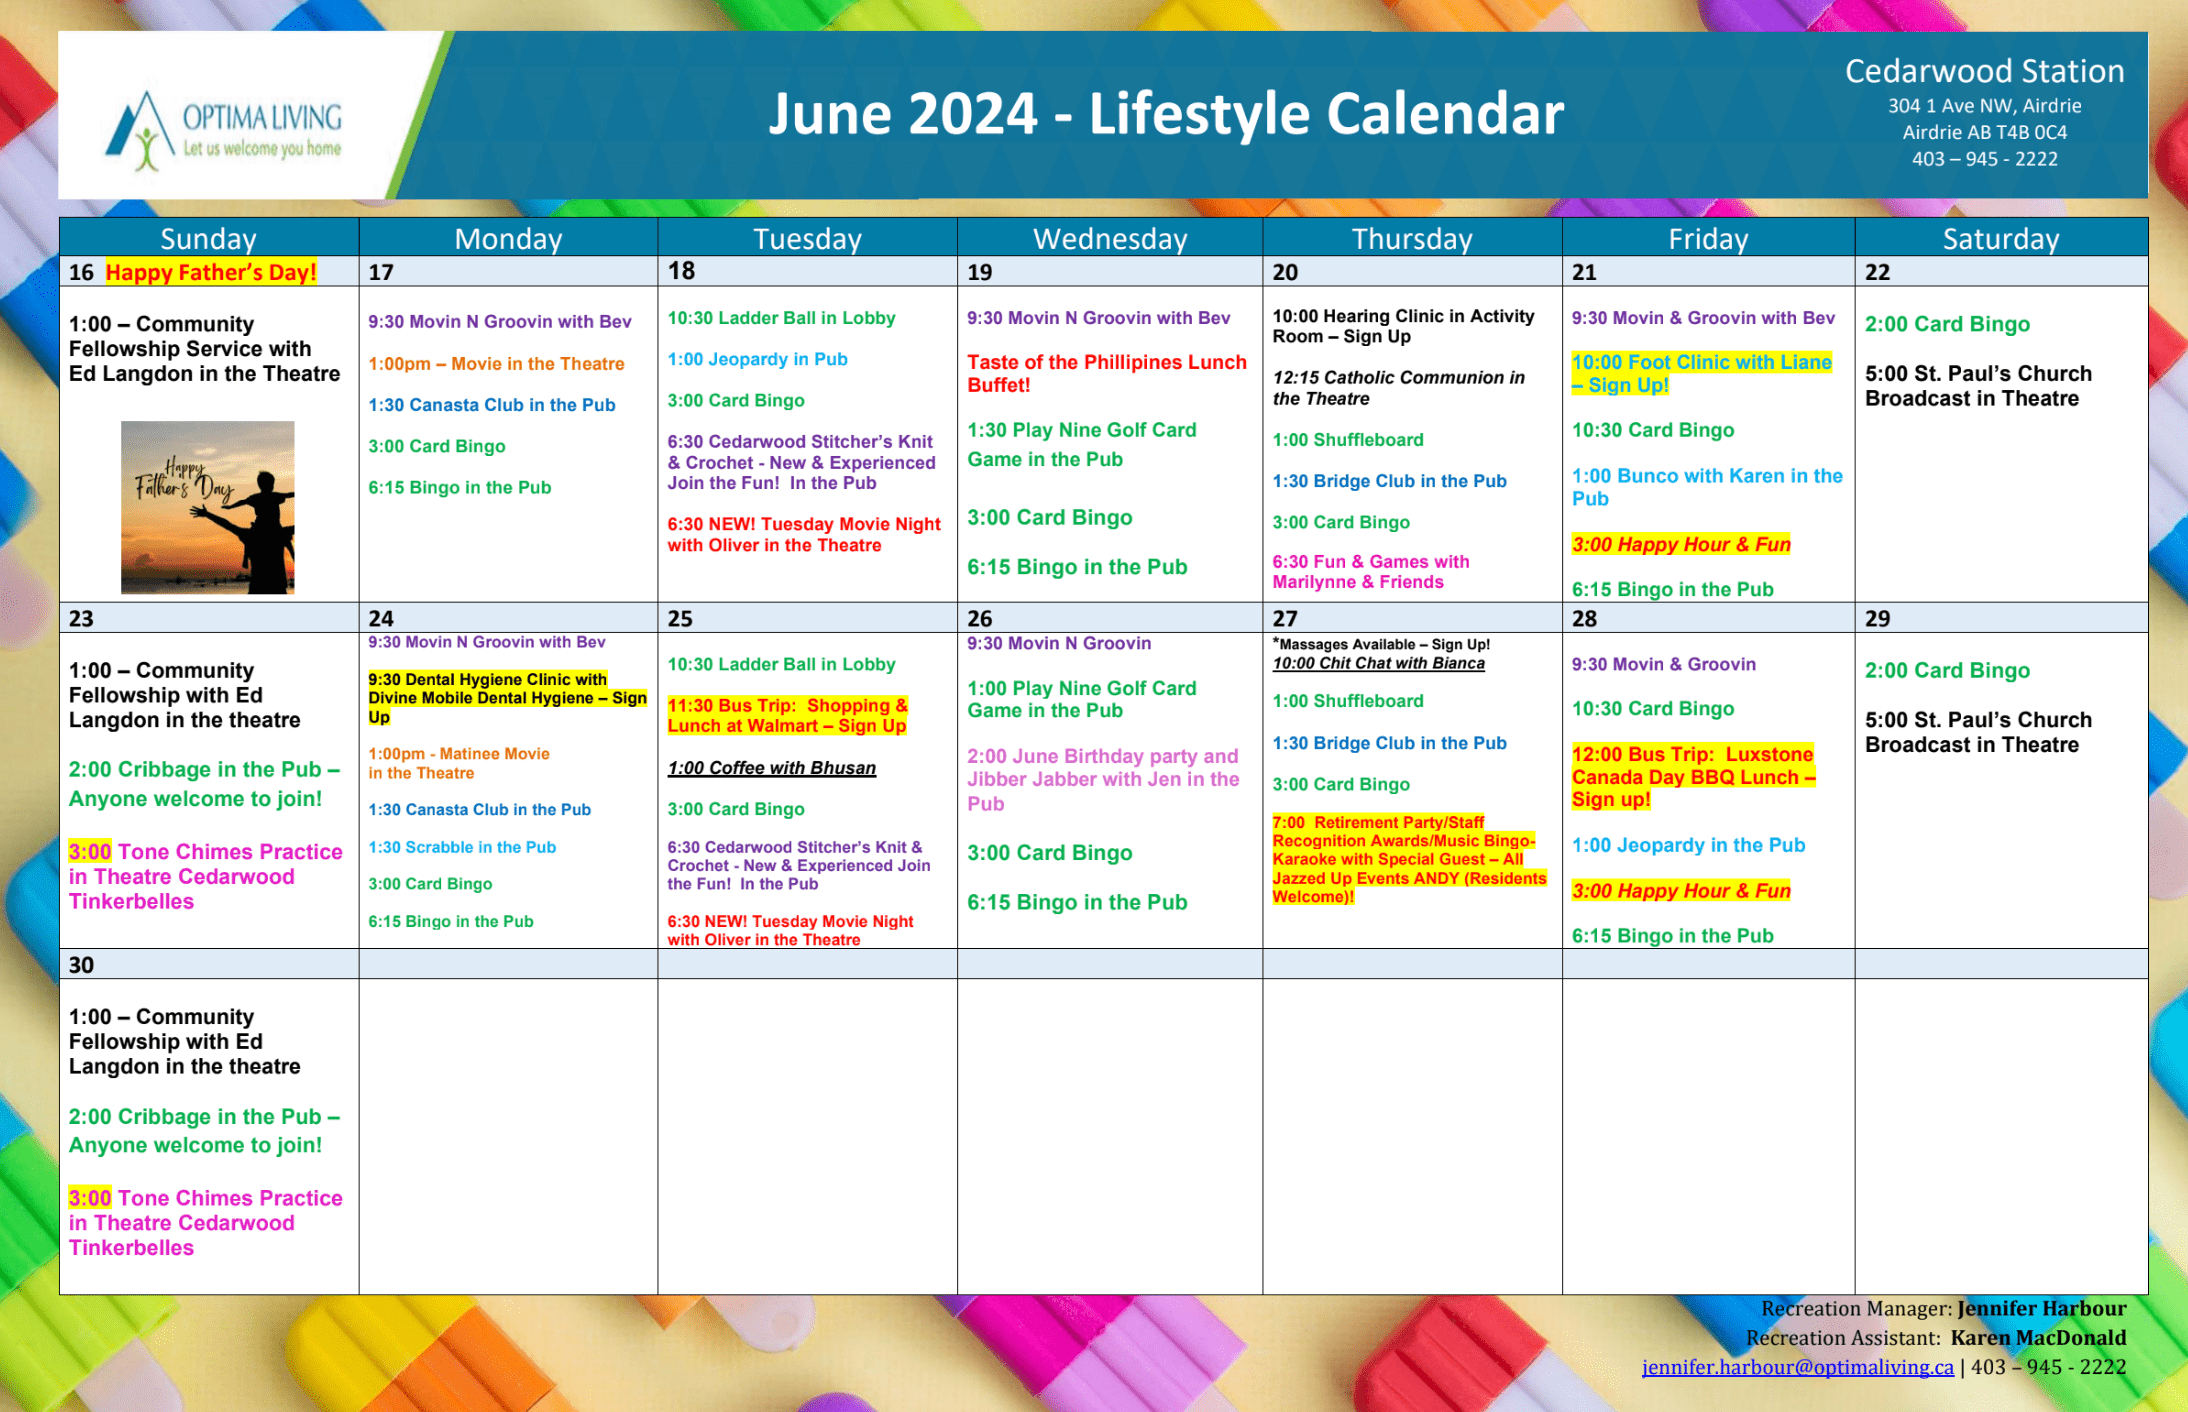 Cedarwood Station June 16 - 30 2024 event calendar